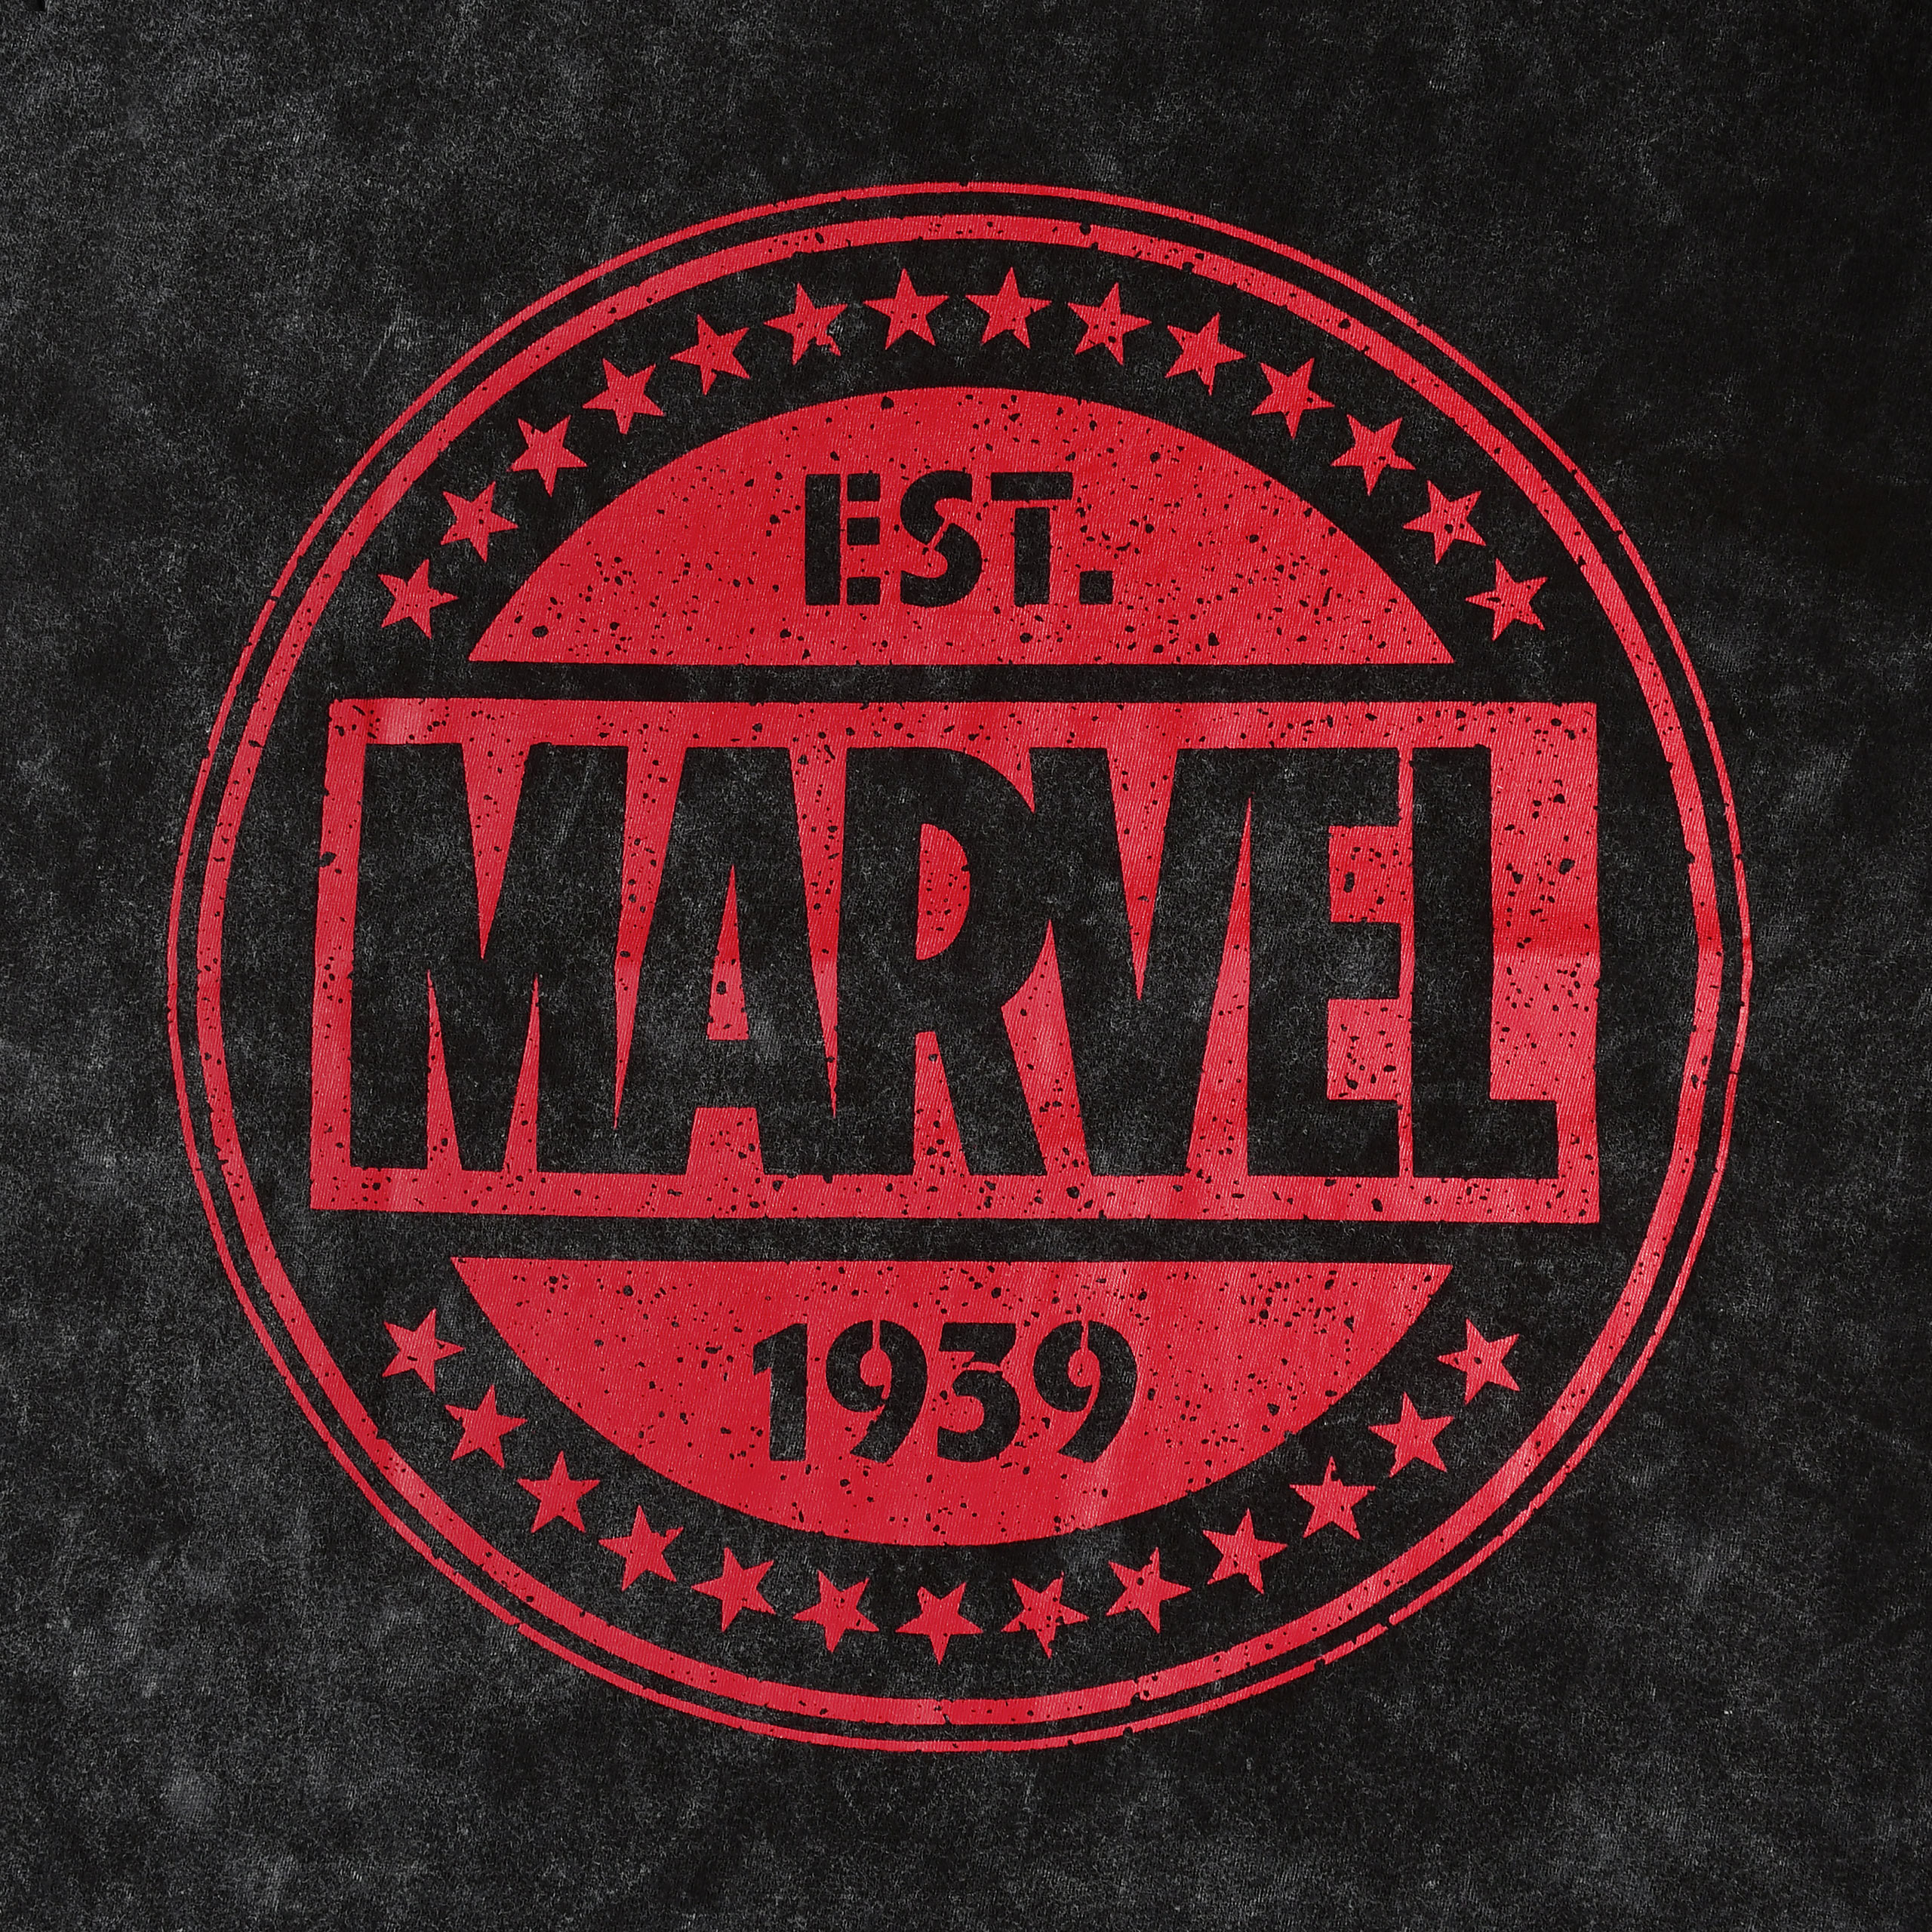 Marvel 1939 T-Shirt zwart